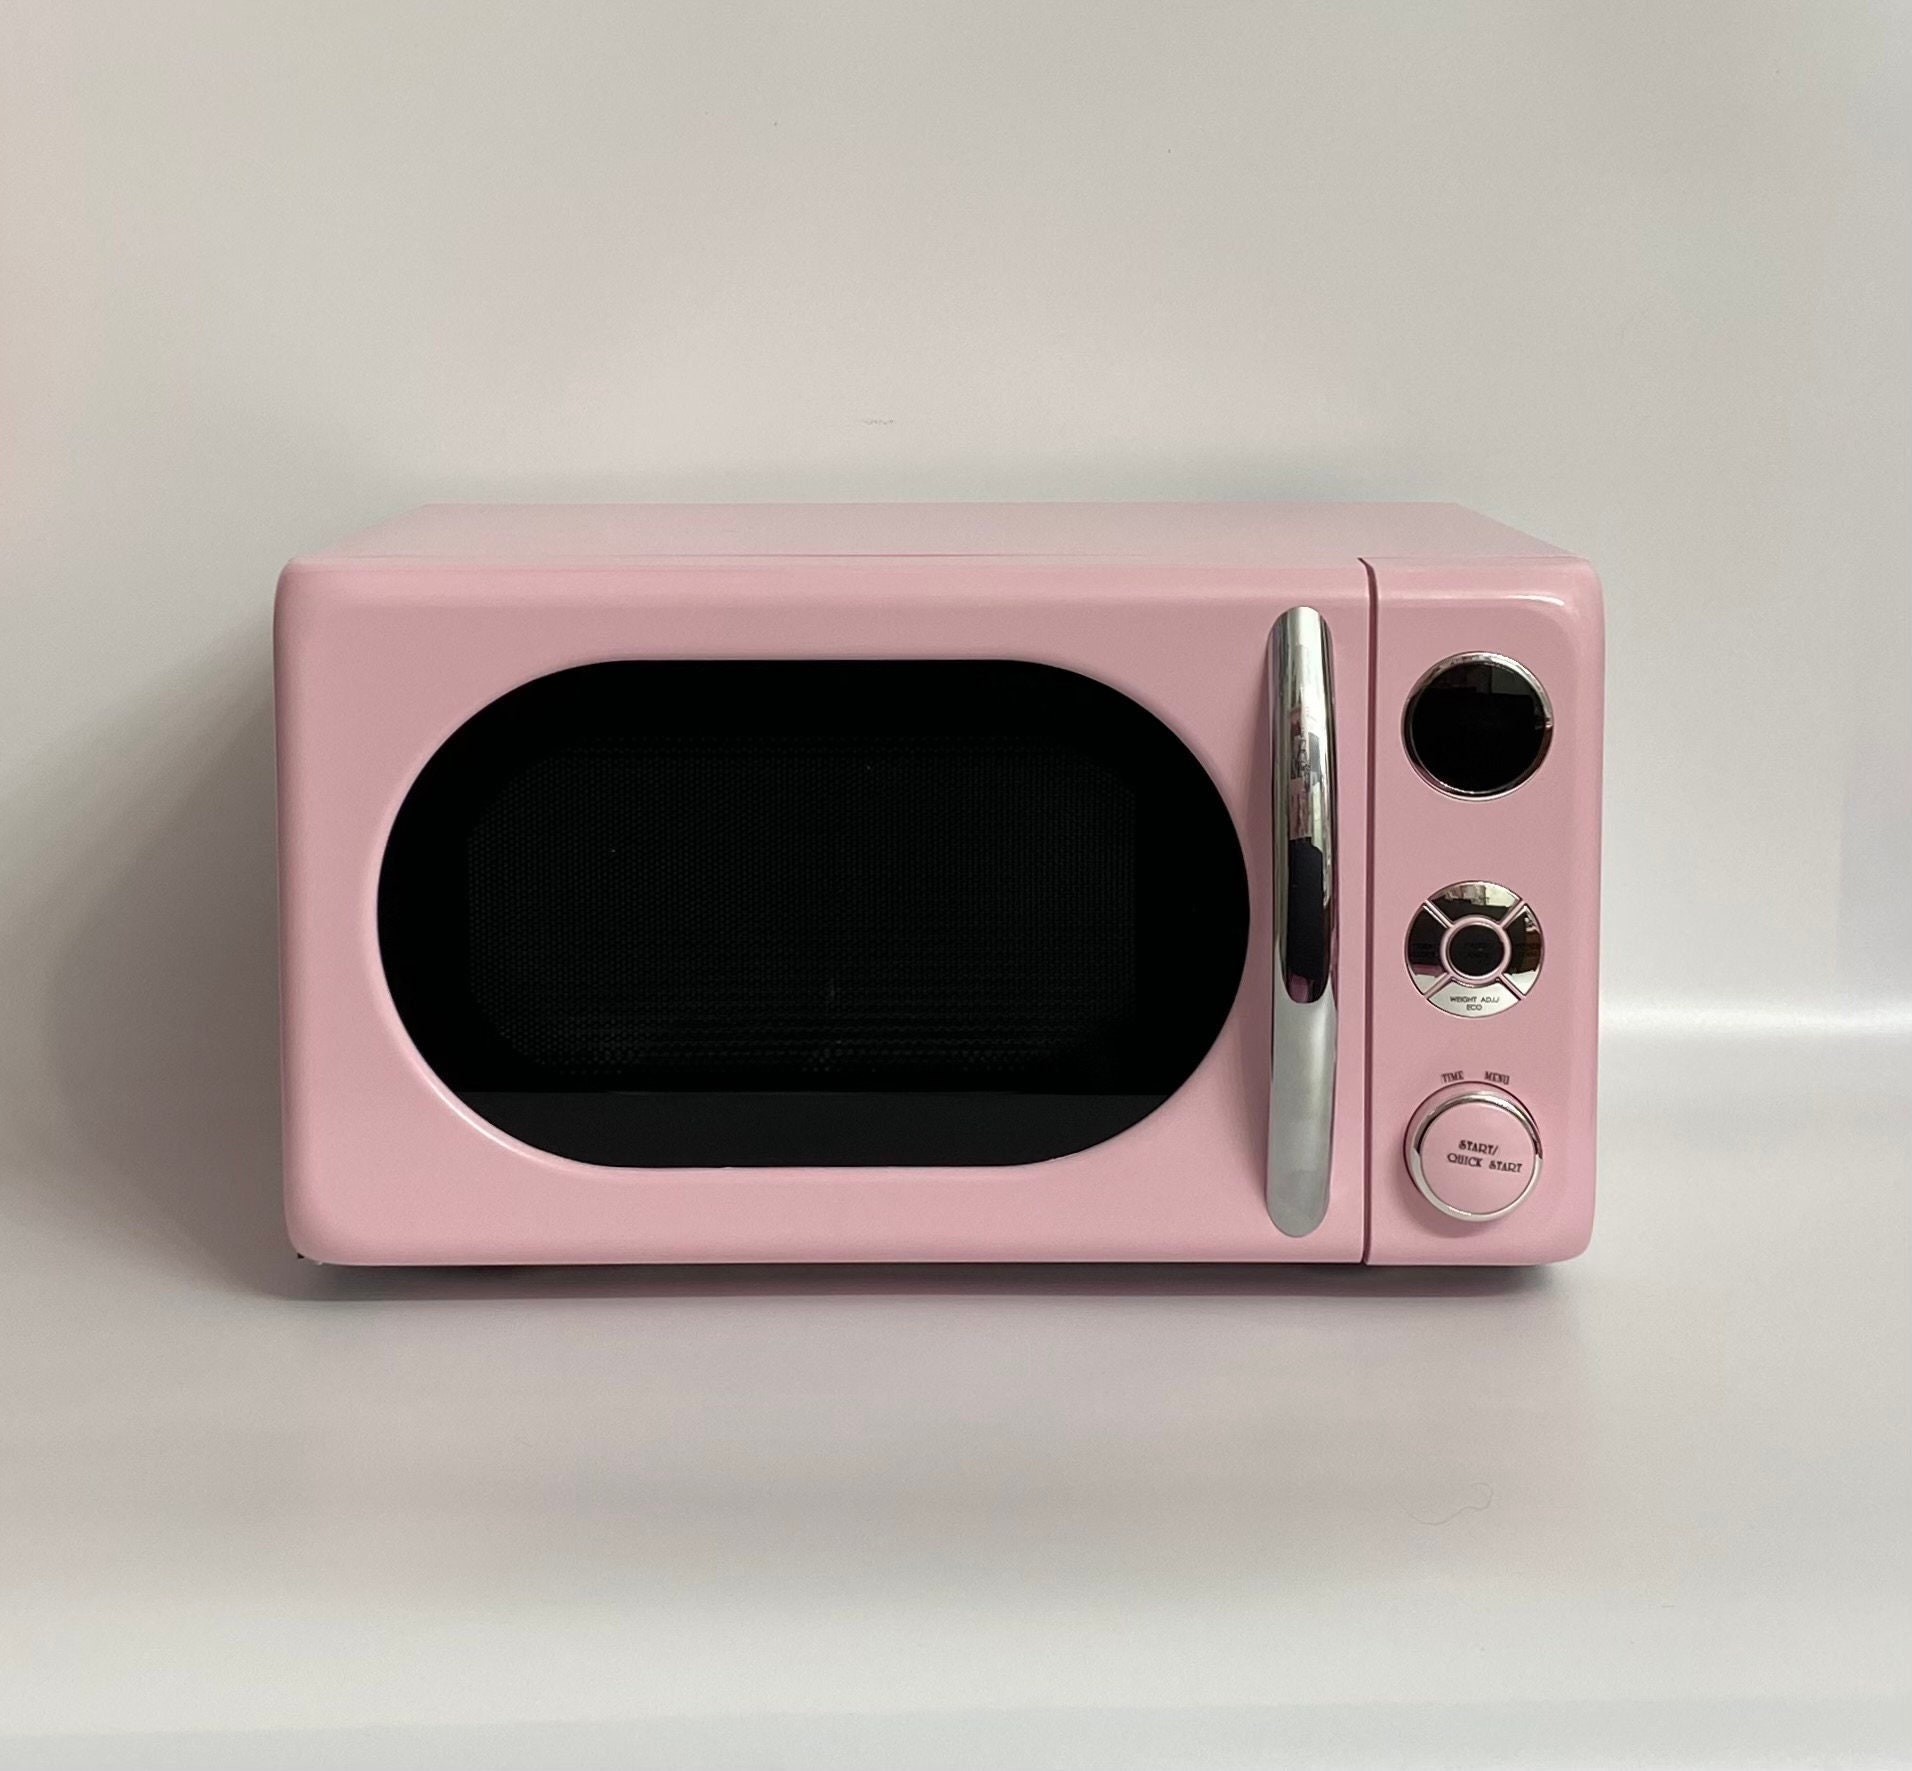 Pink Keurig K-compact, Pink Keurig, Pink Coffee Maker, Pink Kitchenaid, Pink  Cuisinart, Shabby Chic Pink 